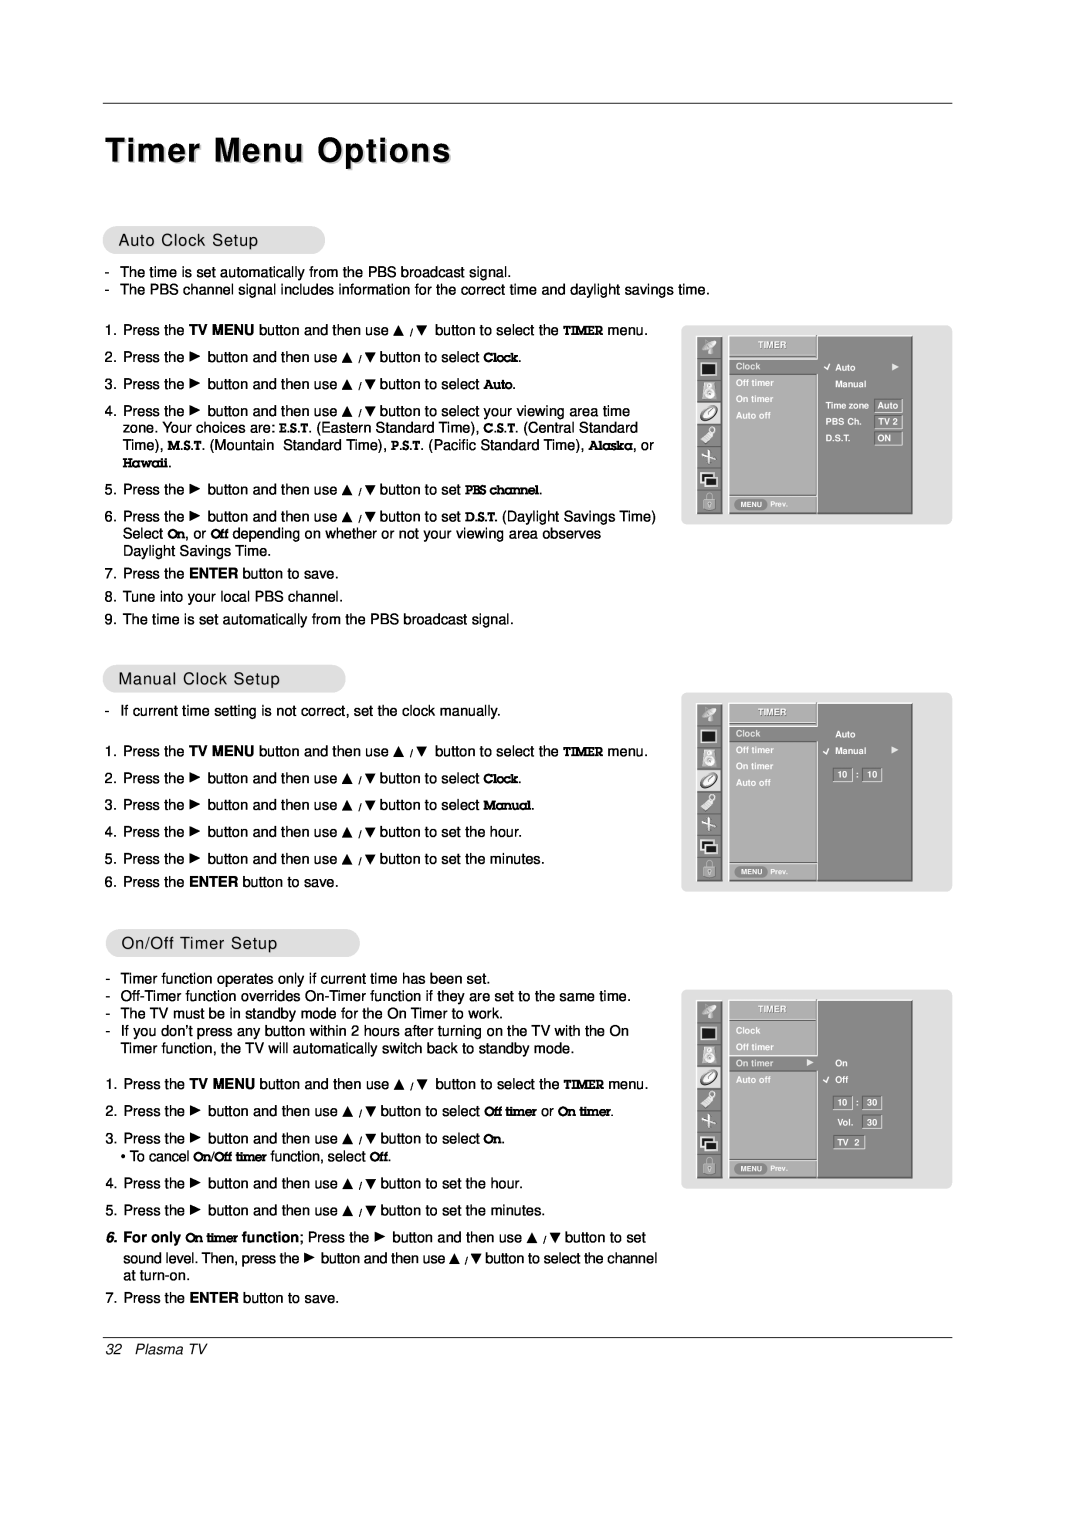 Mitsubishi Electronics PD-4225S Timer Menu Options, Auto Clock Setup, Manual Clock Setup, On/Off Timer Setup, Plasma TV 